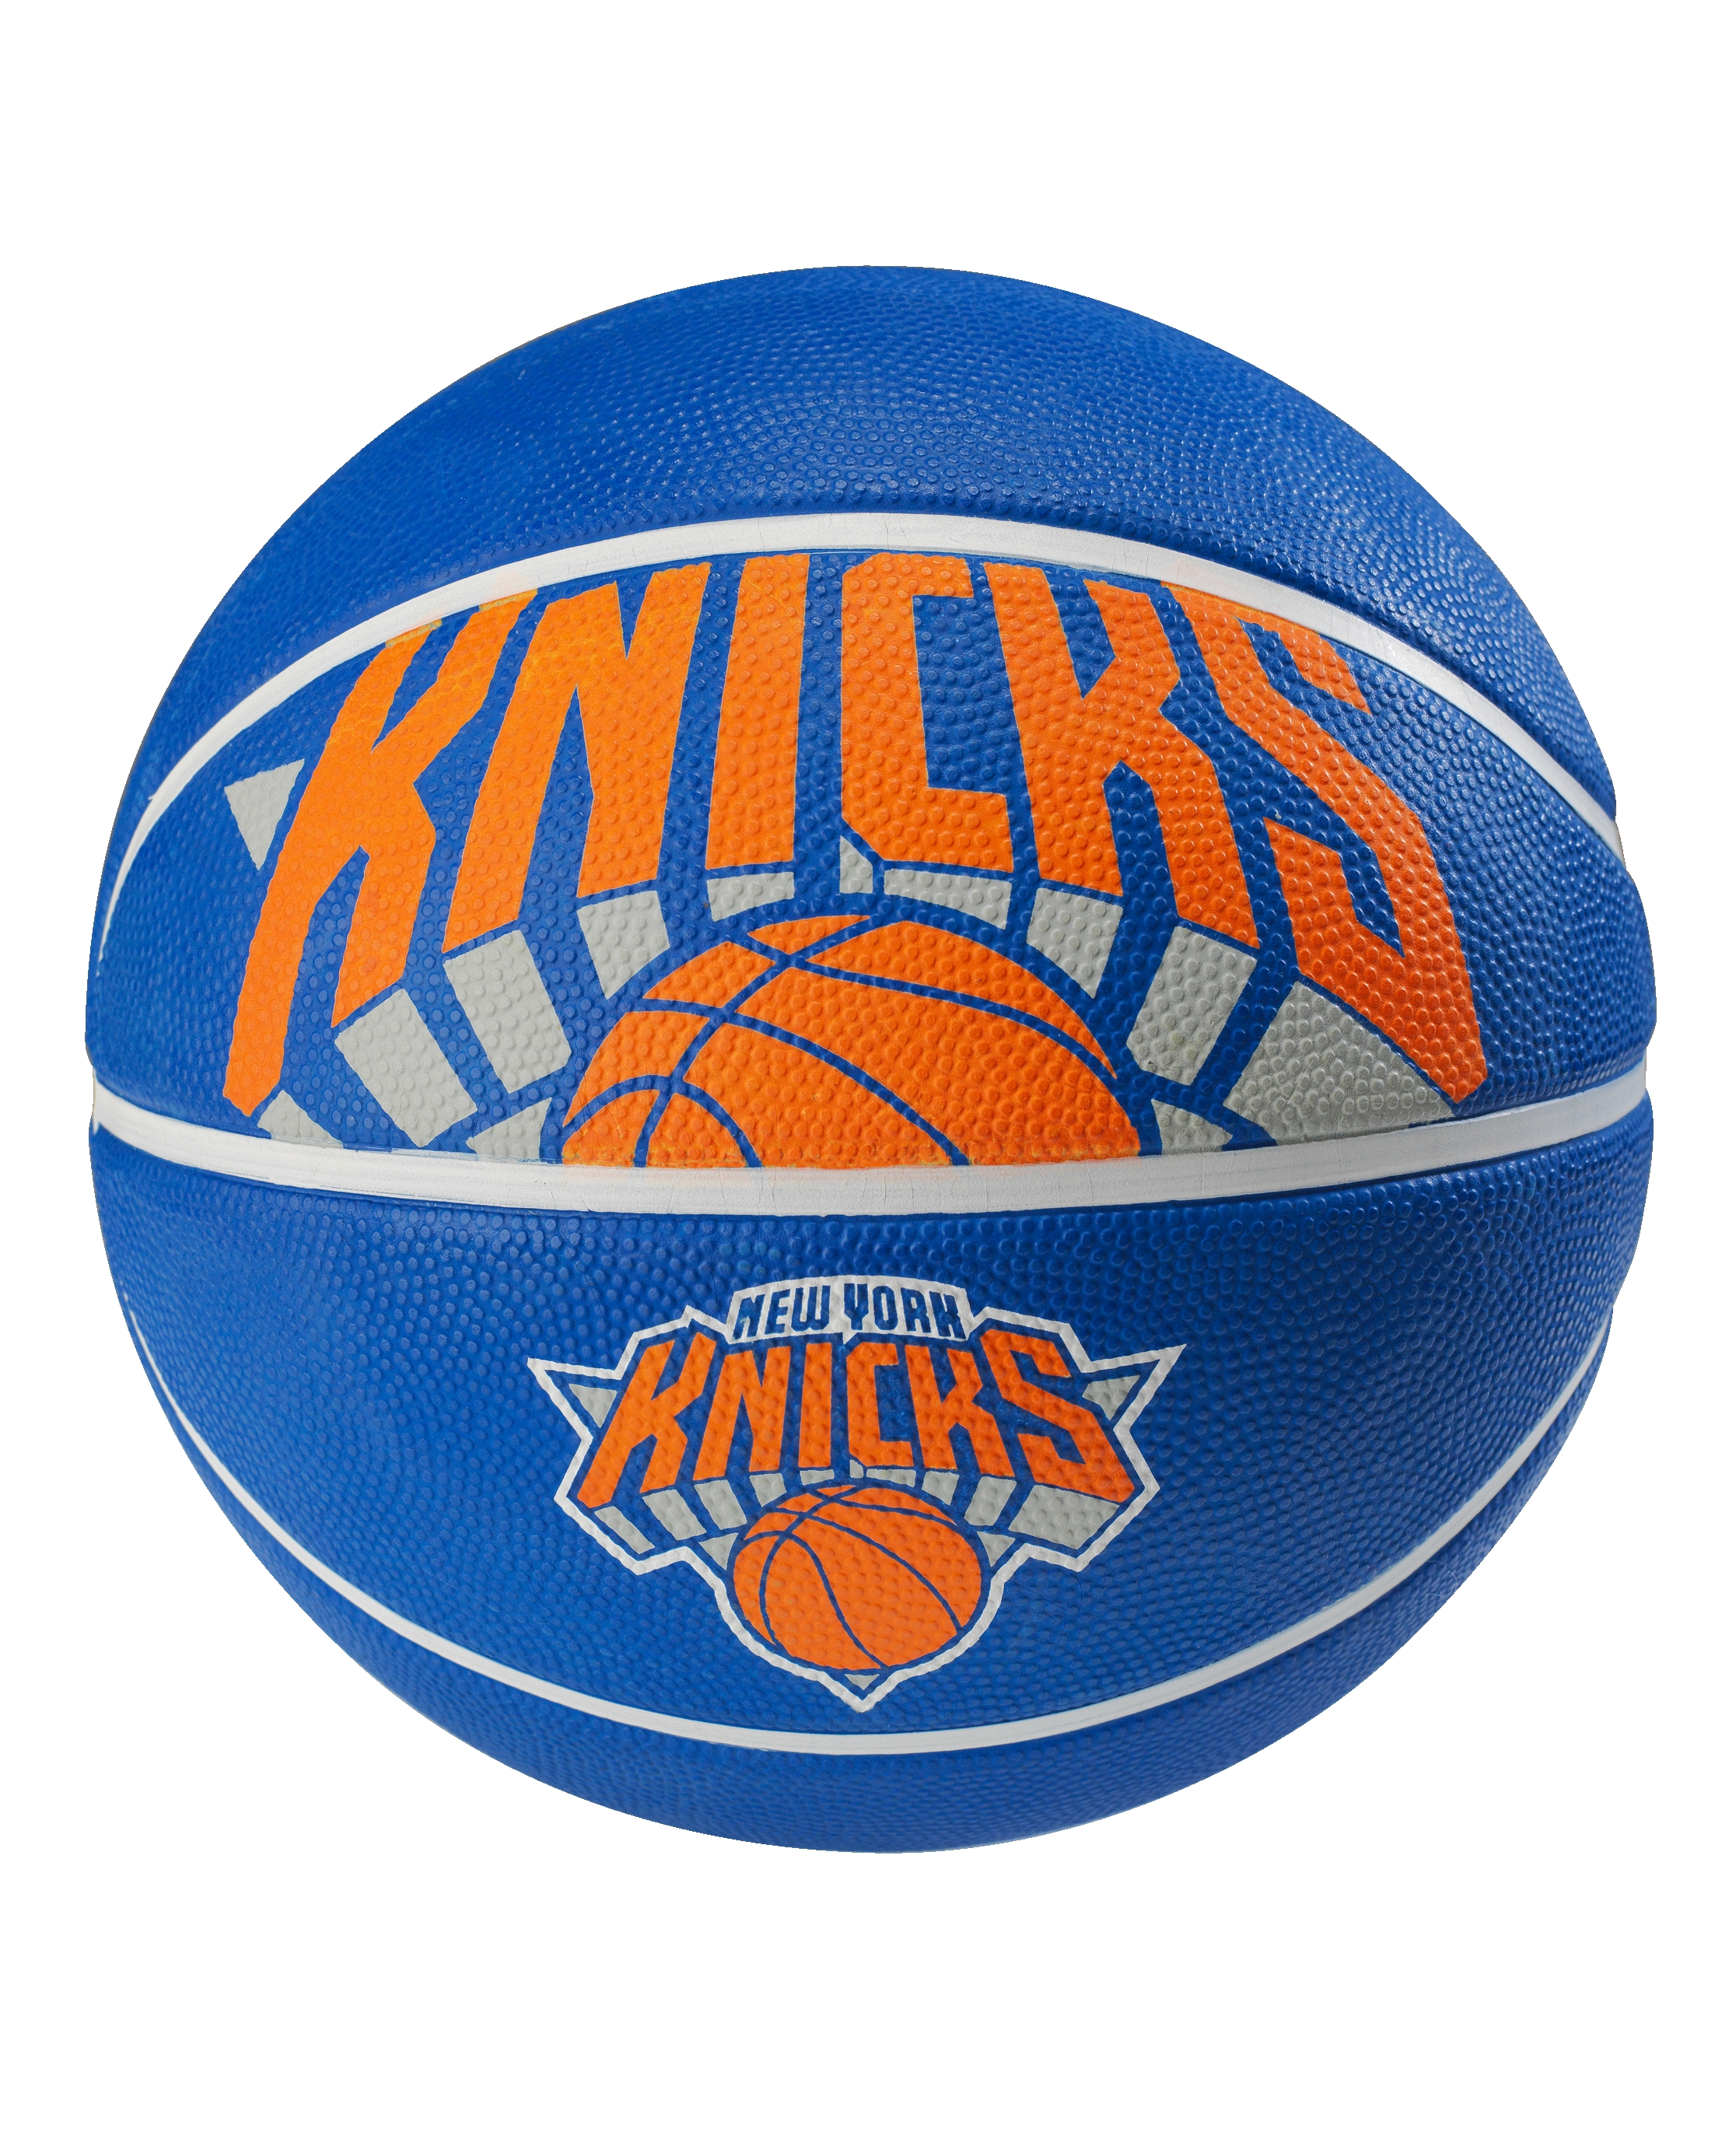 Spalding NBA New York Knicks Team Logo Basketball - image 2 of 2